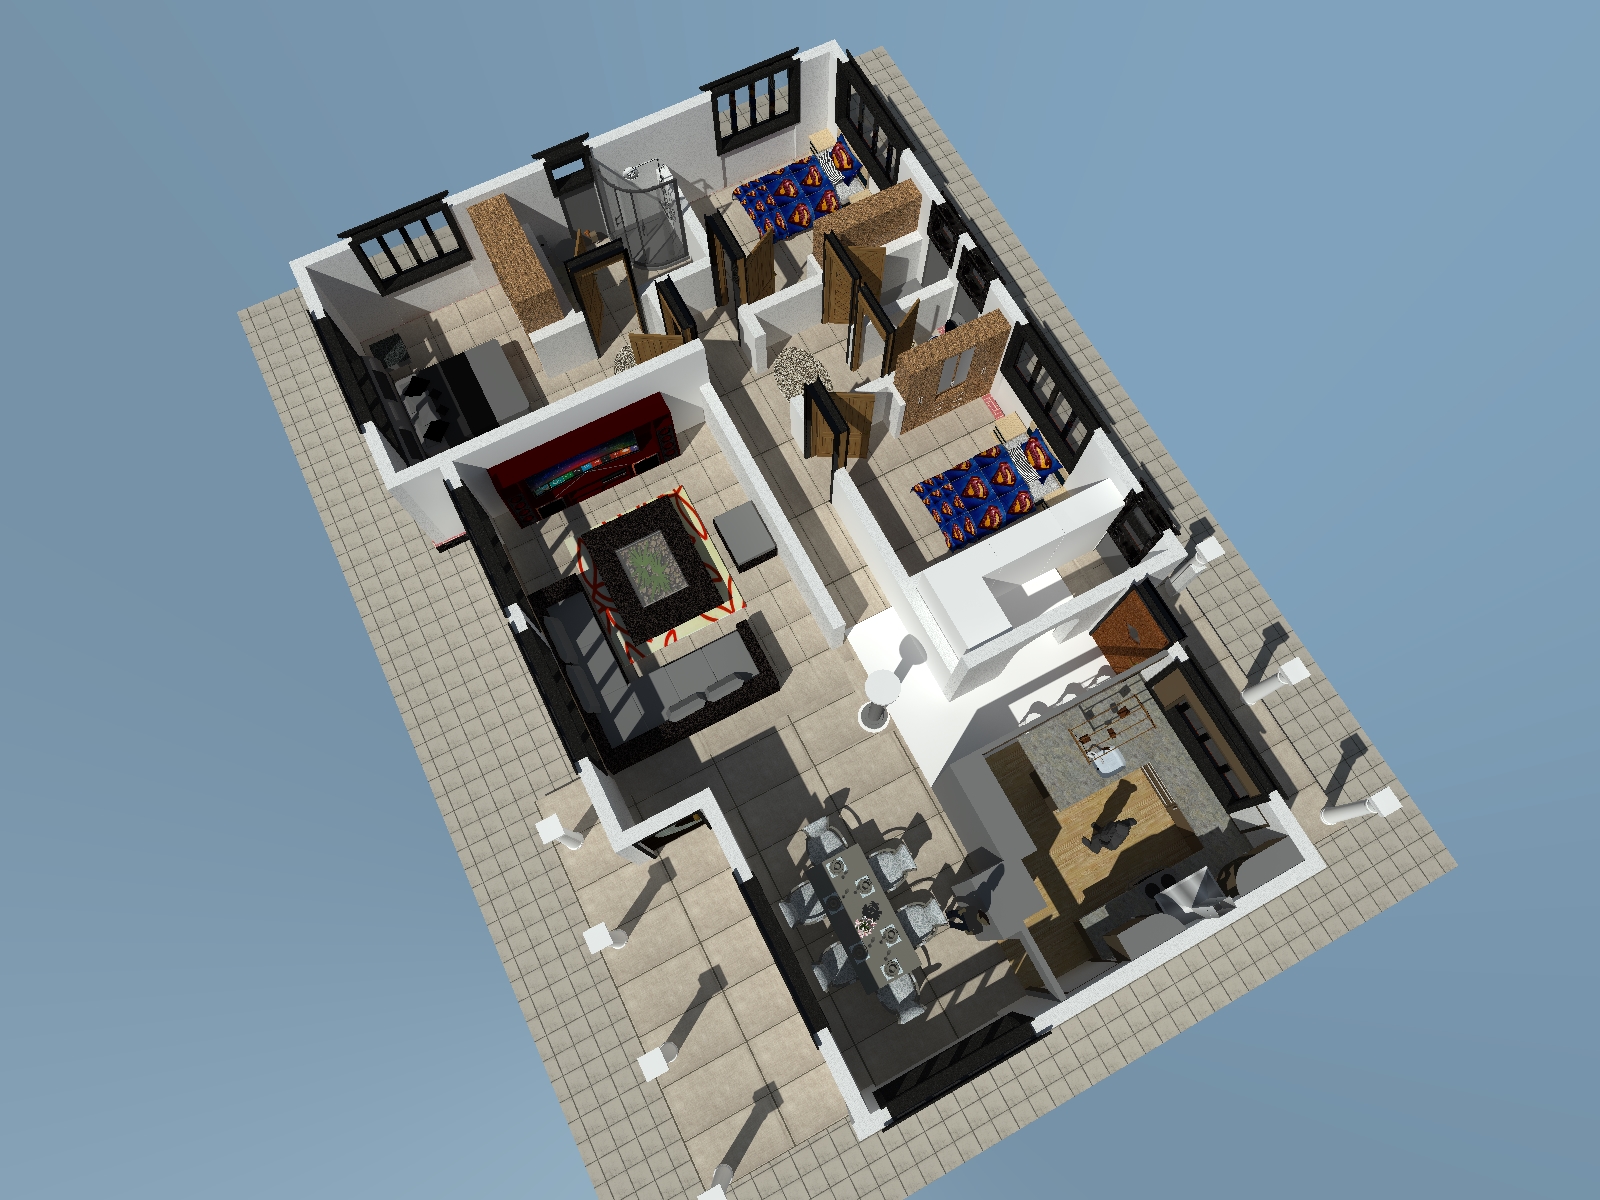 3 Bedroom house plan